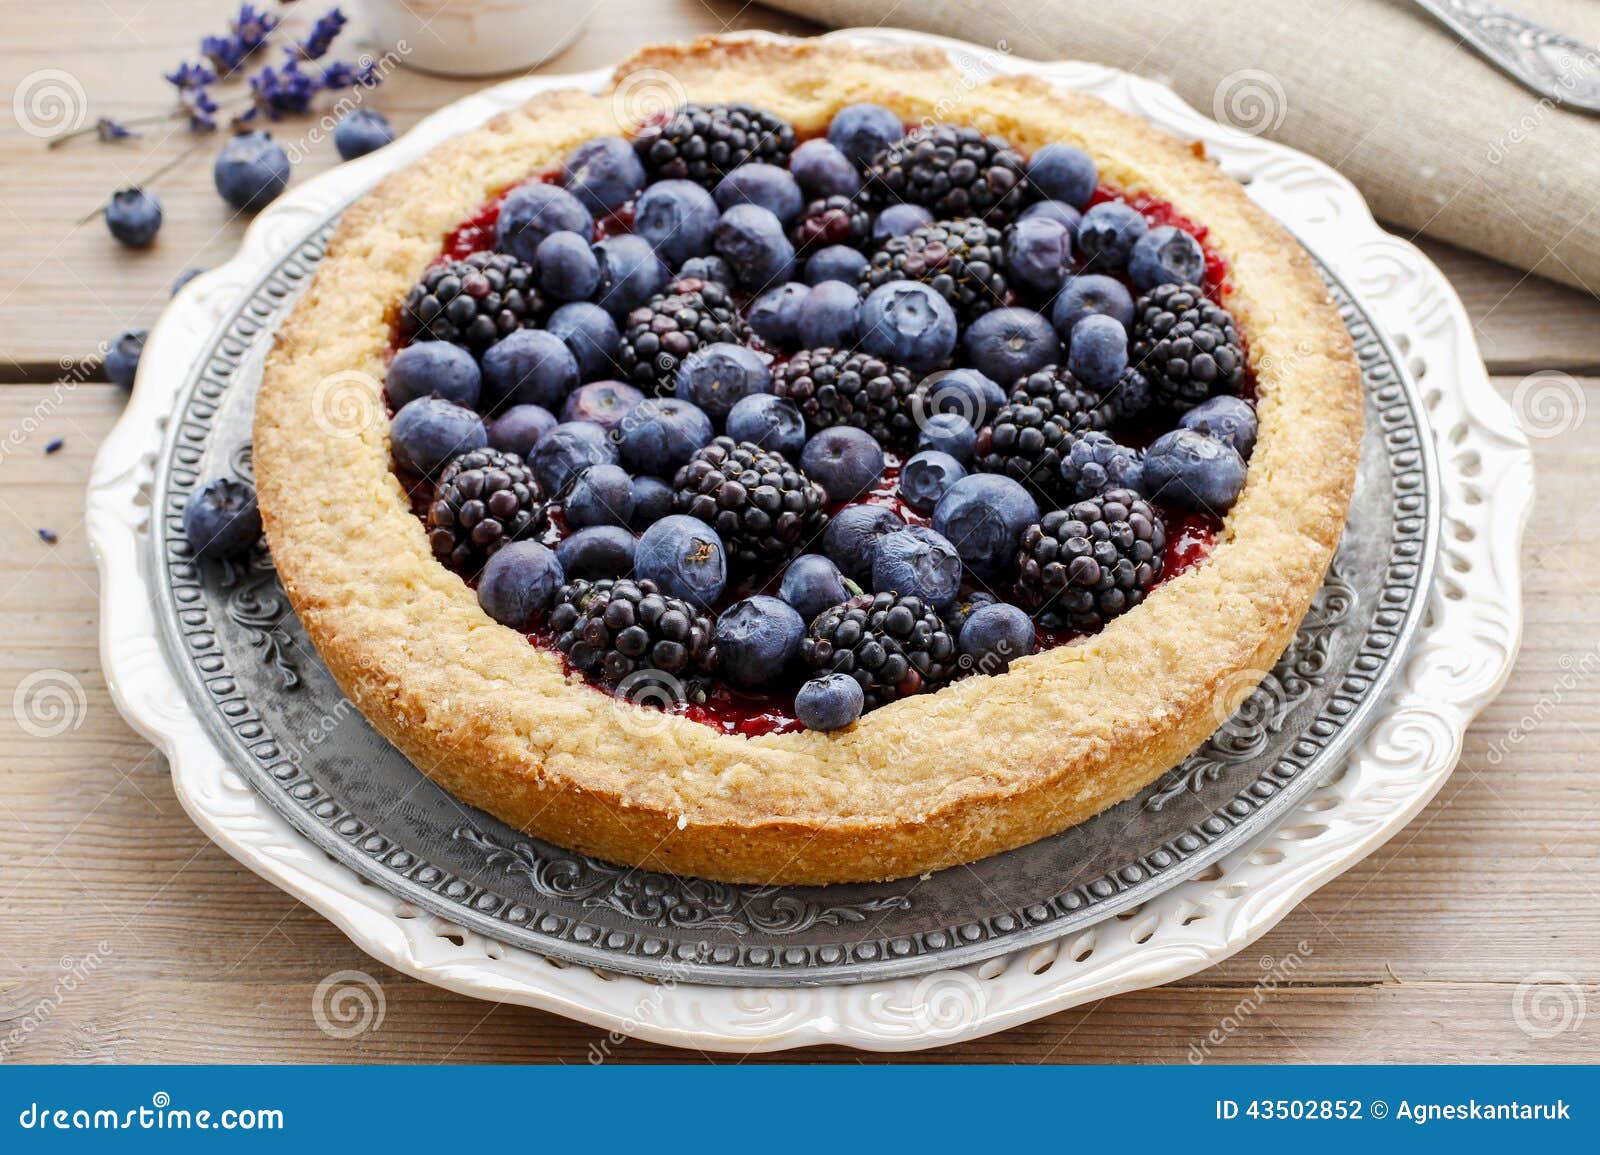 Blueberry and Blackberry Tart Stock Photo - Image of autumn, cookbook ...